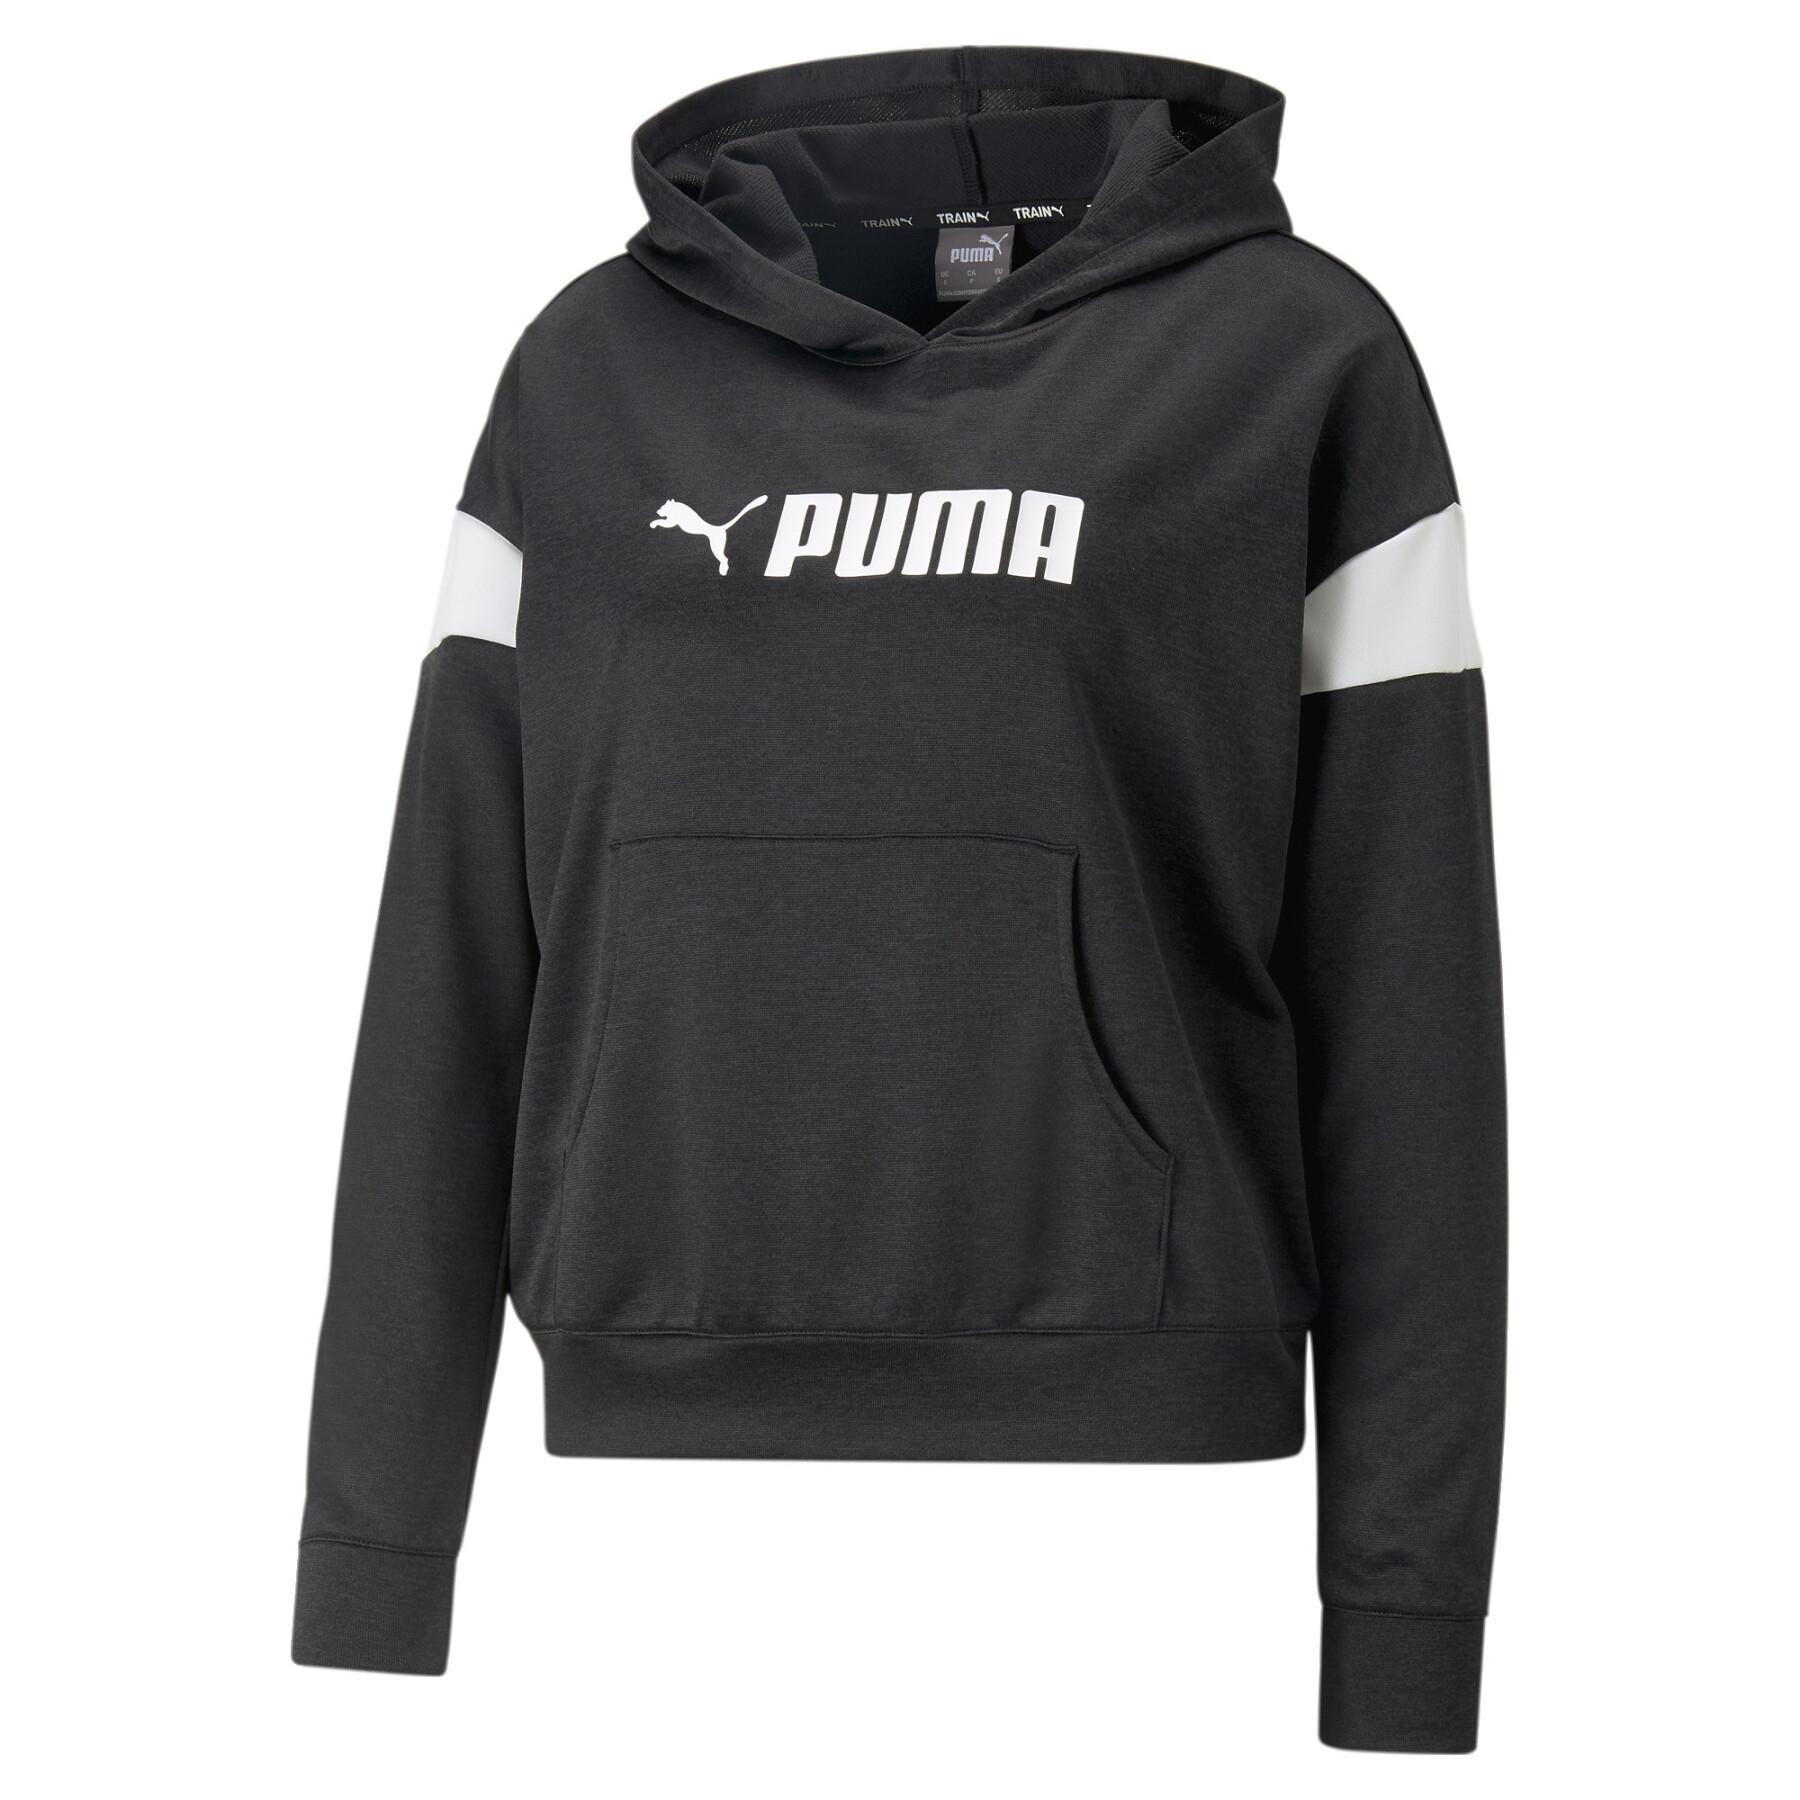 Sweatshirt damska dzianinowa bluza z kapturem Puma Fit Tech